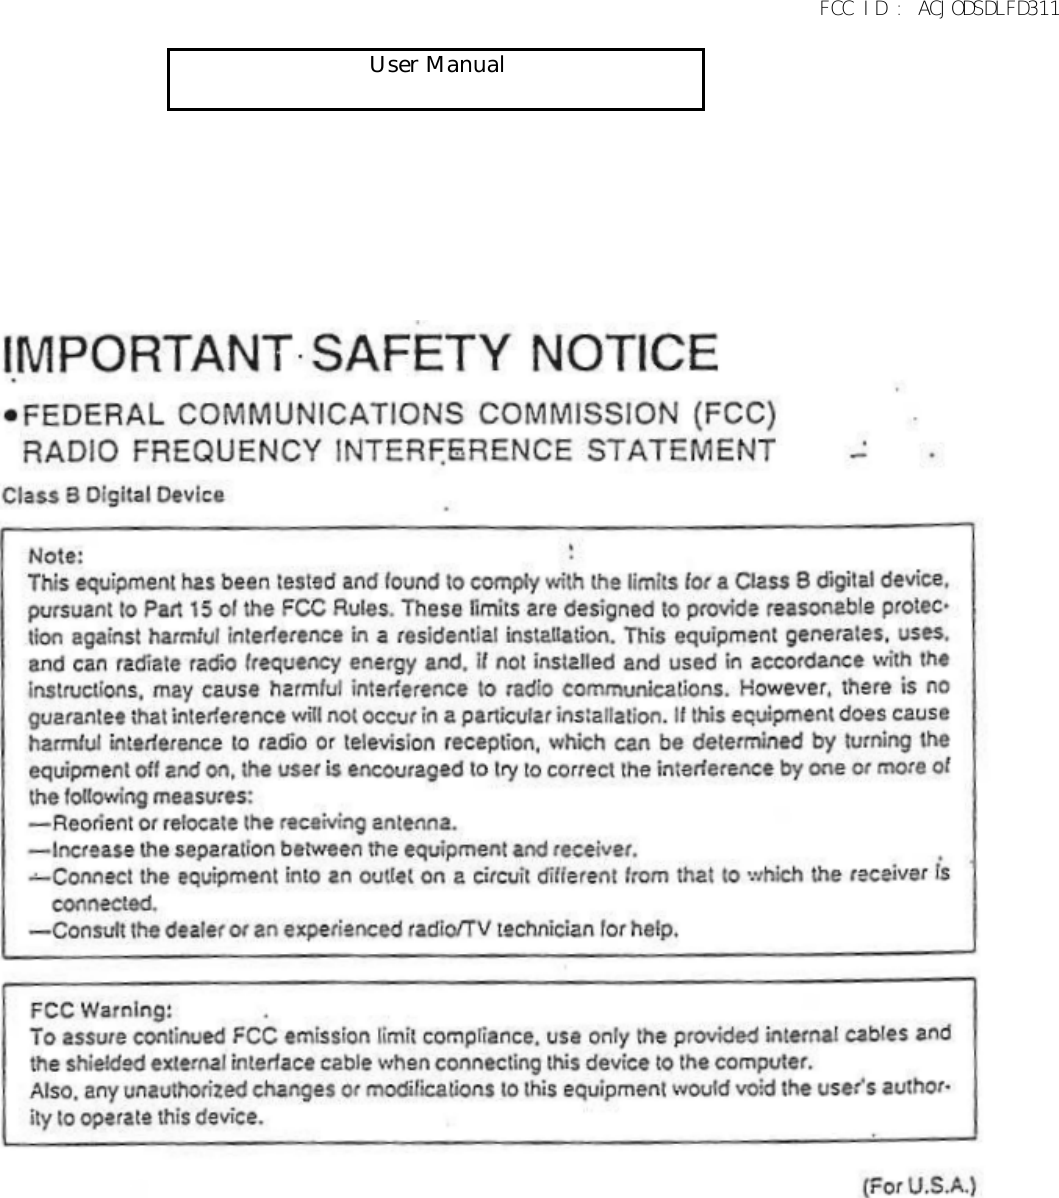 FCC ID : ACJODSDLFD311                     User Manual                     